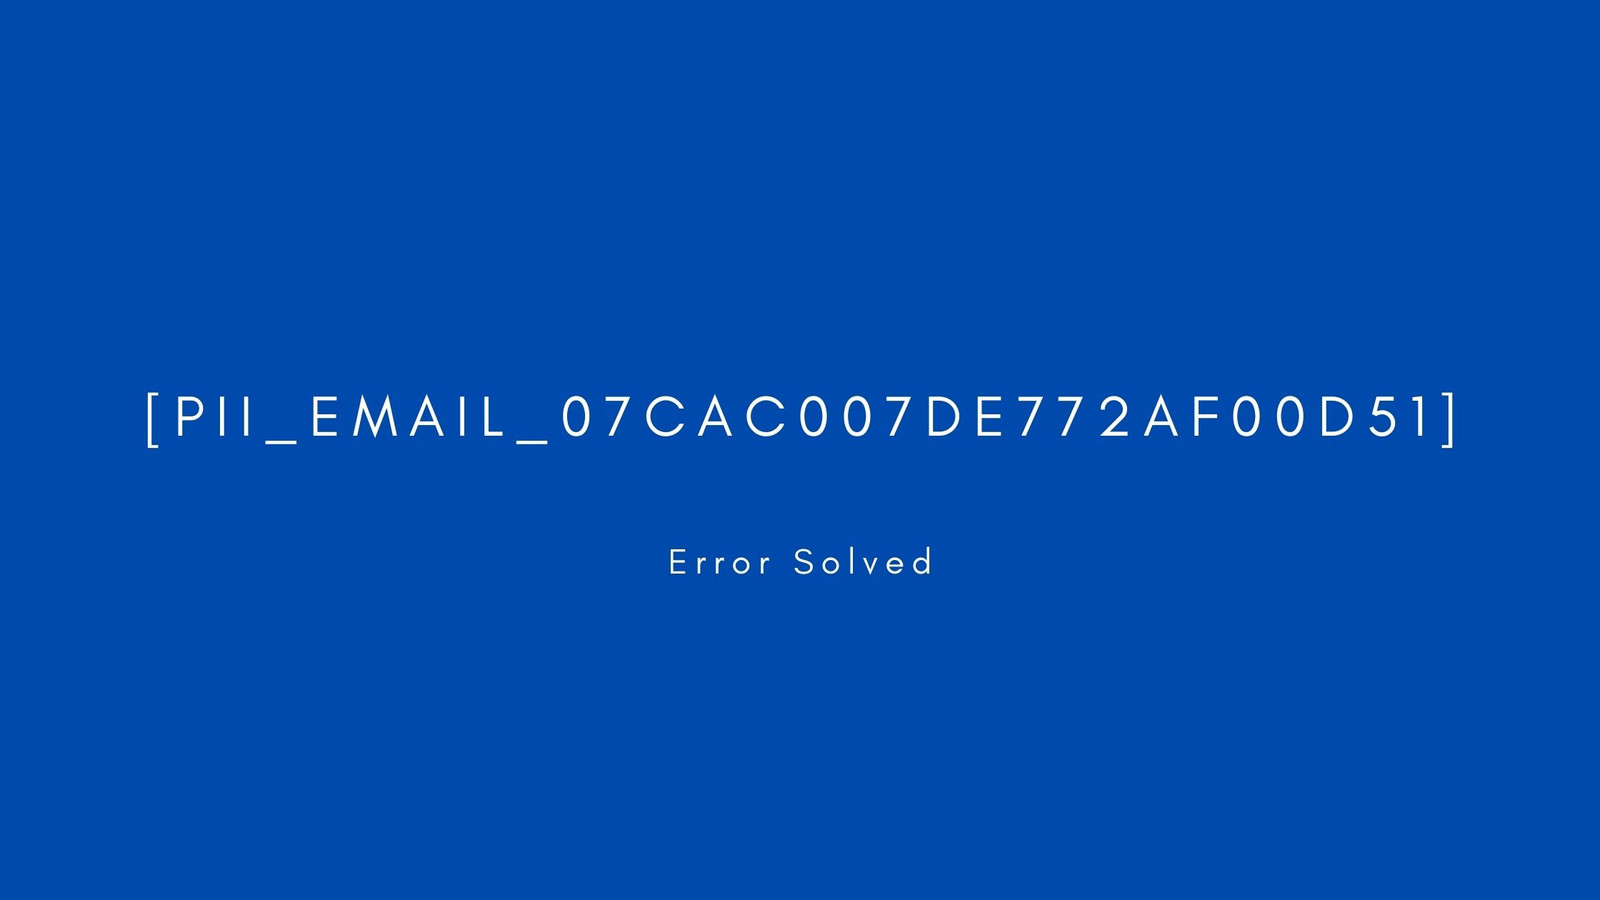 Ways to Fix Error [pii_email_07cac007de772af00d51] Code in 2022